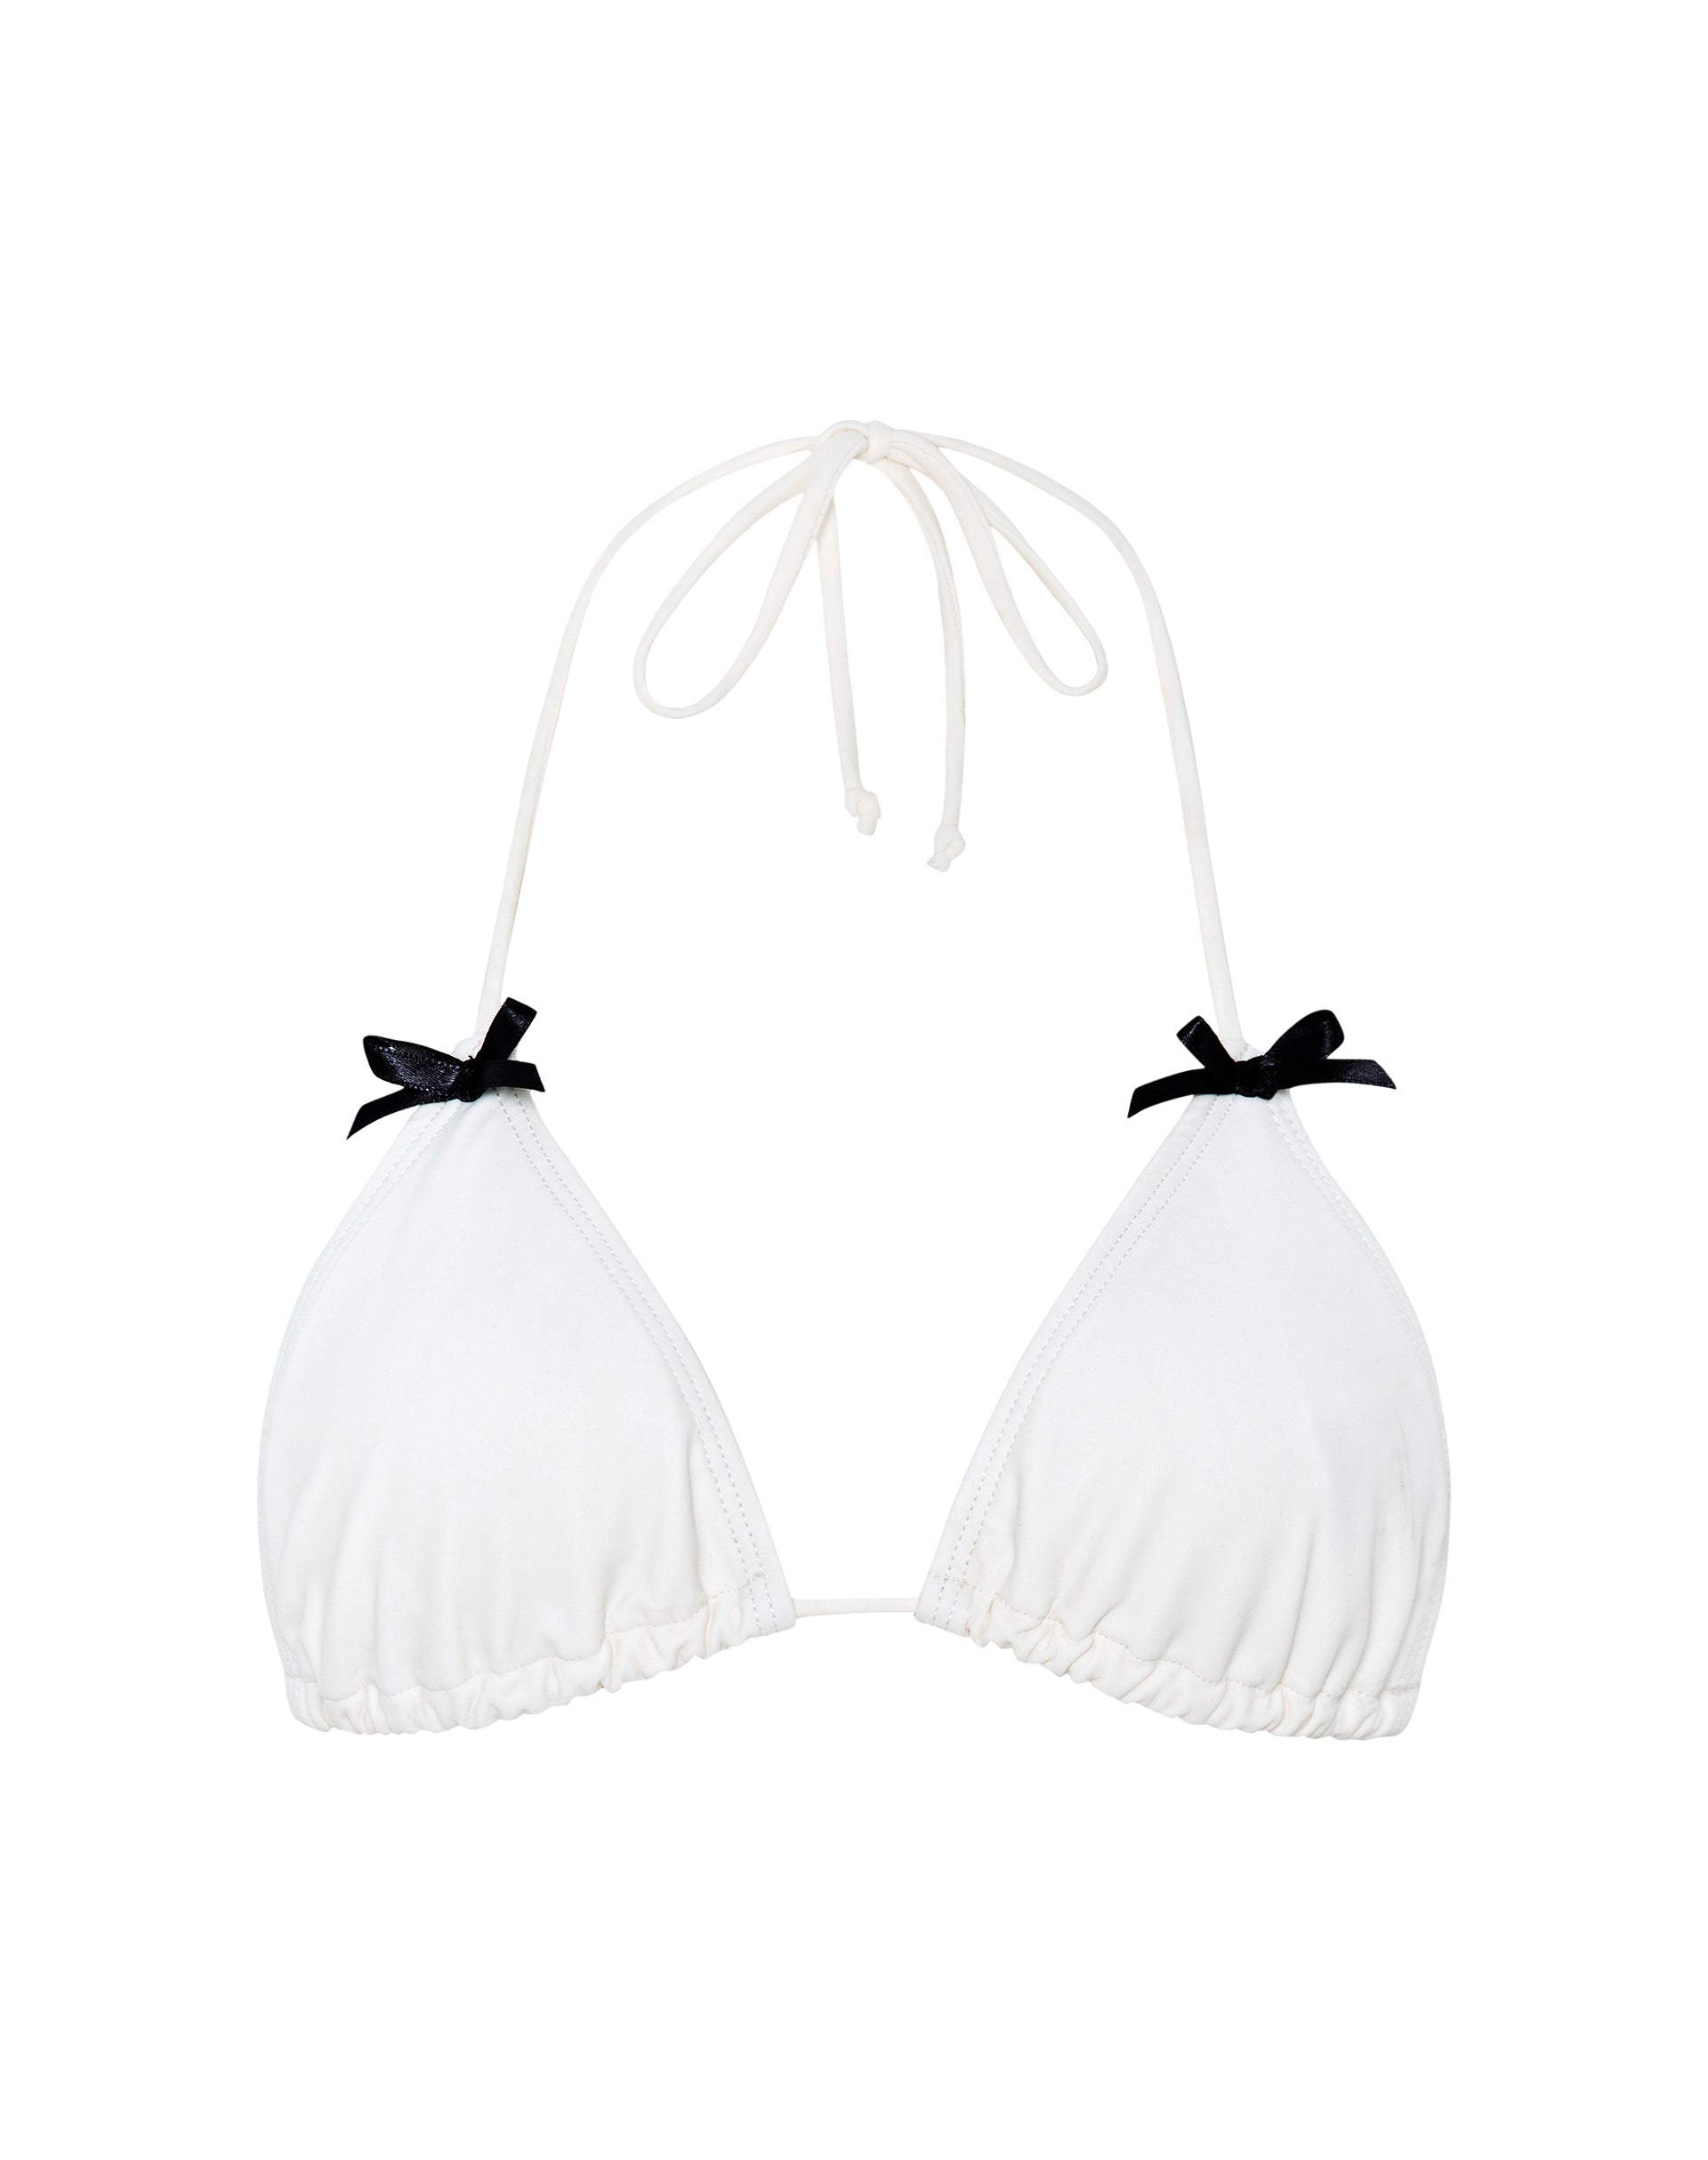 Image de Pami Bikini Top in Ivory with Black Bow